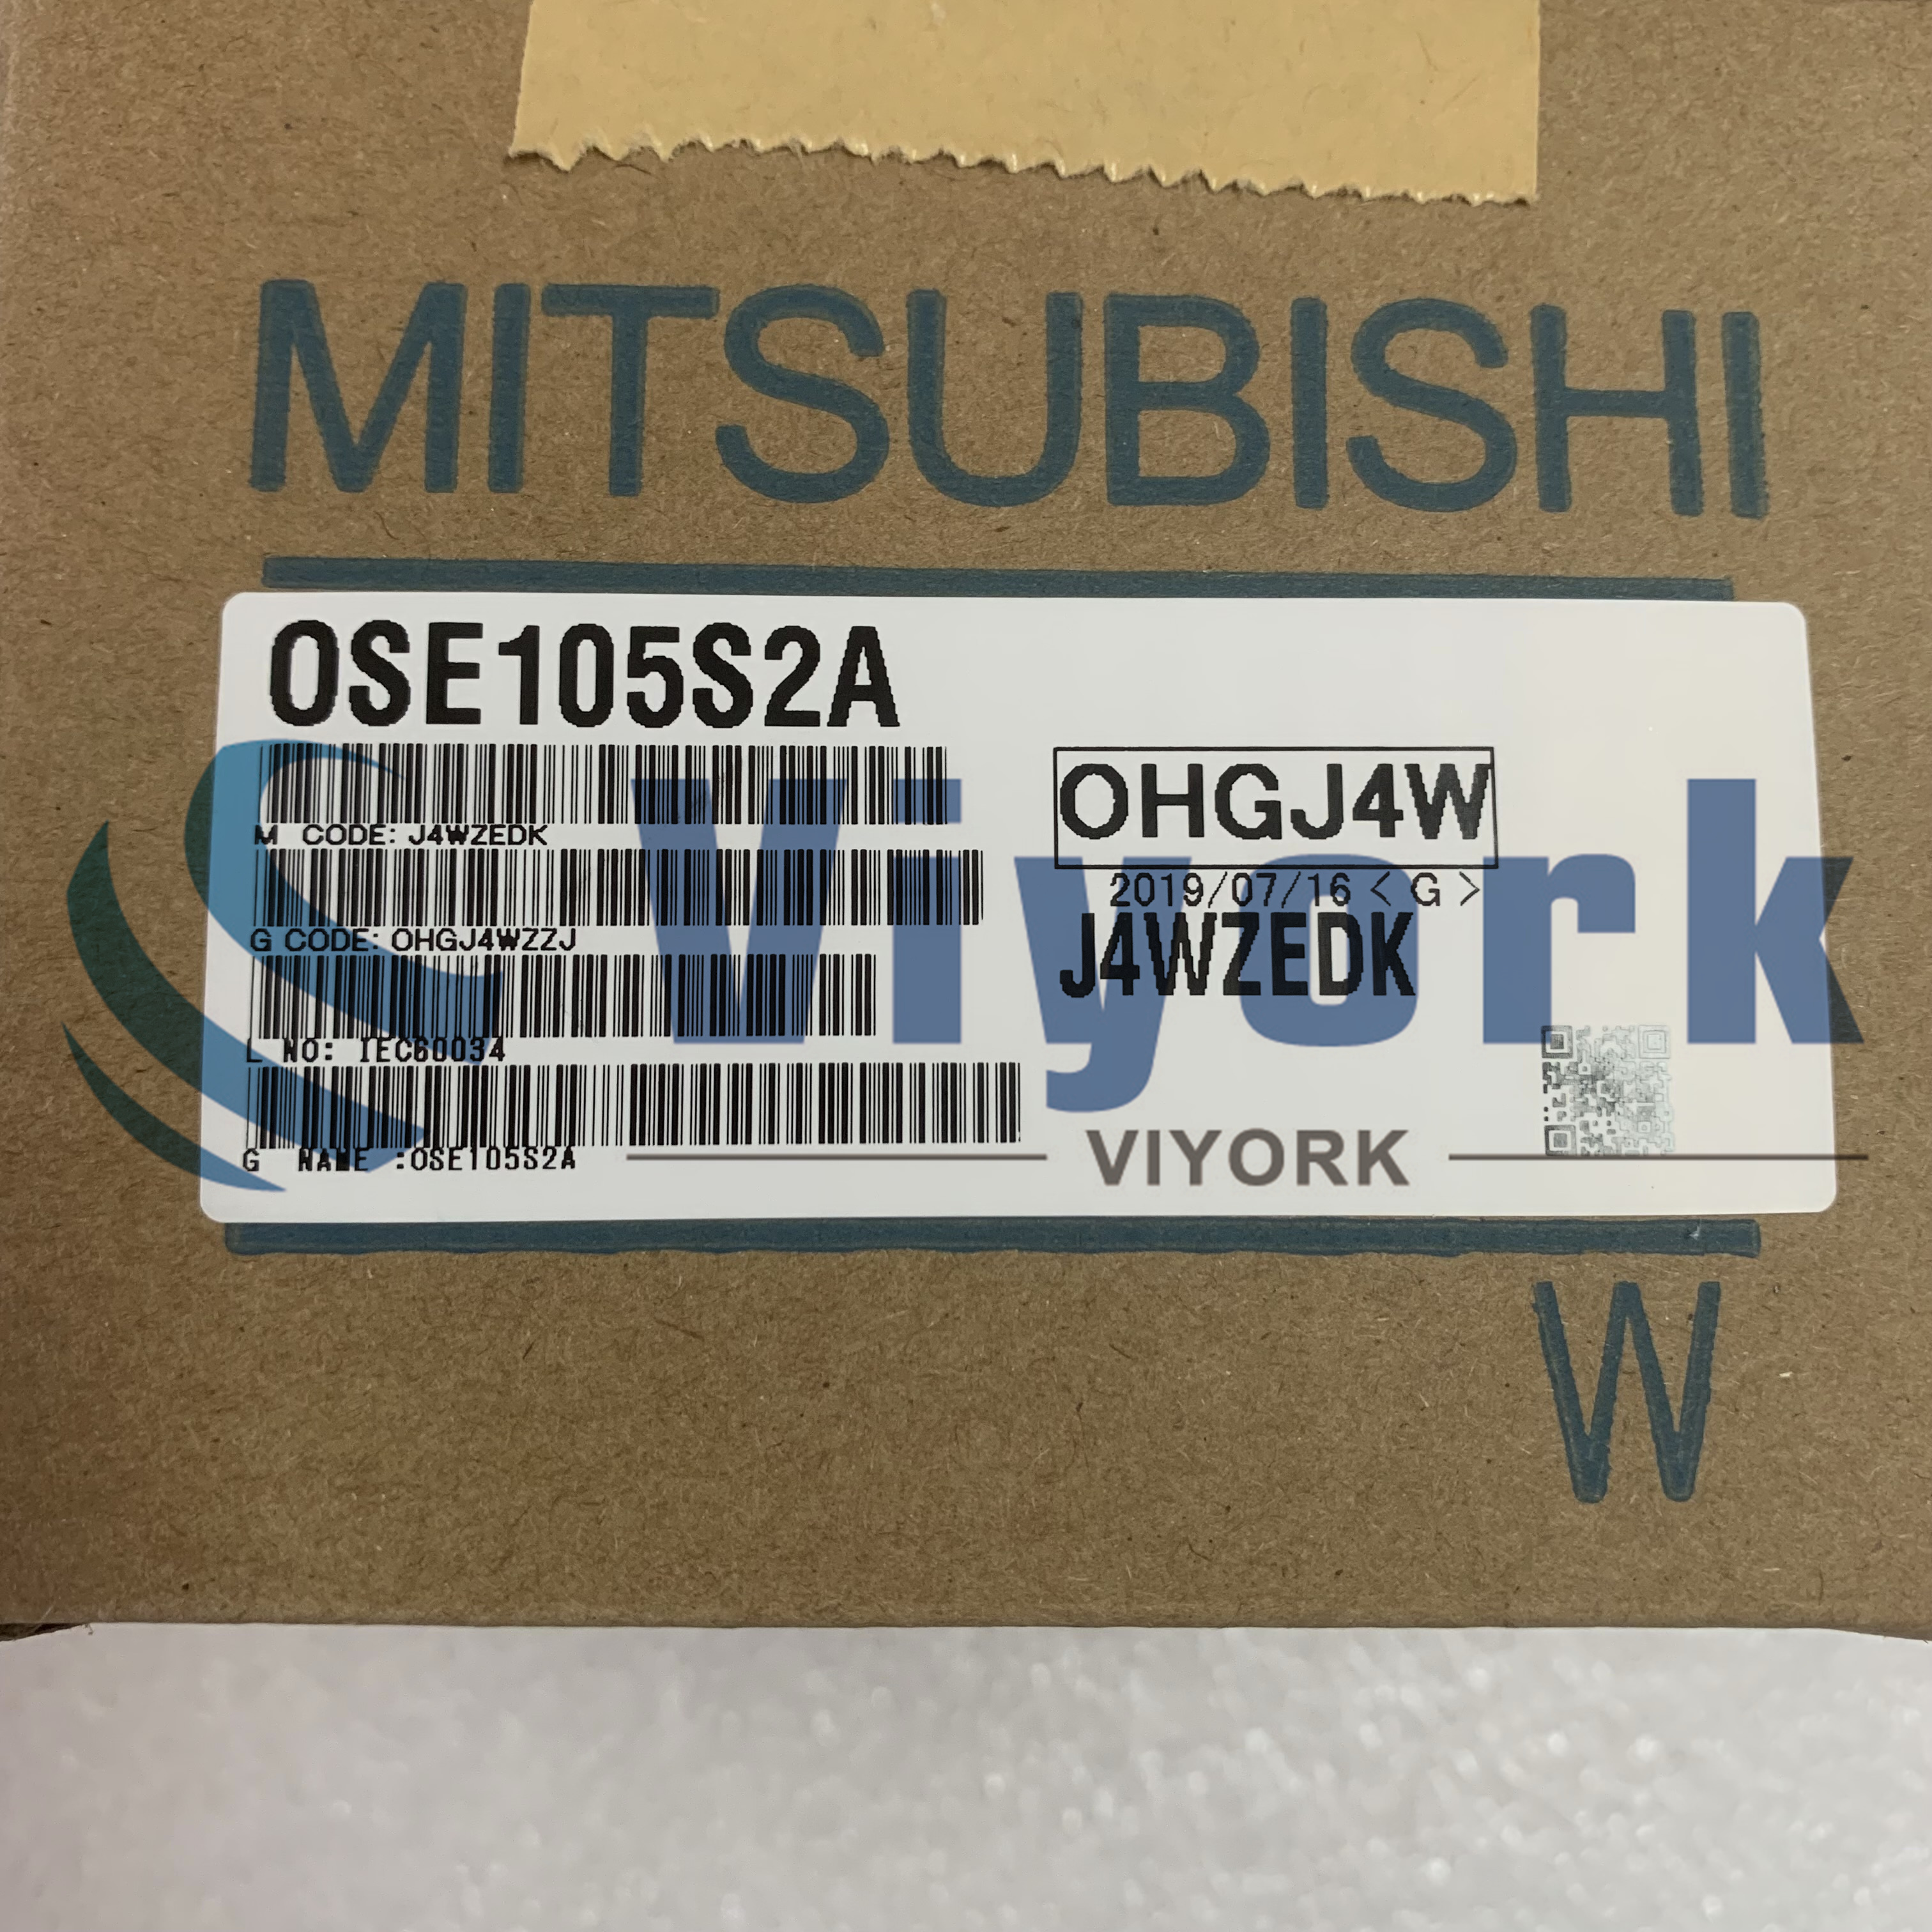 Mitsubishi ENCODER OSE105S2A ROTARY ENCODER 8PIN FLANGE MOUNT NEW